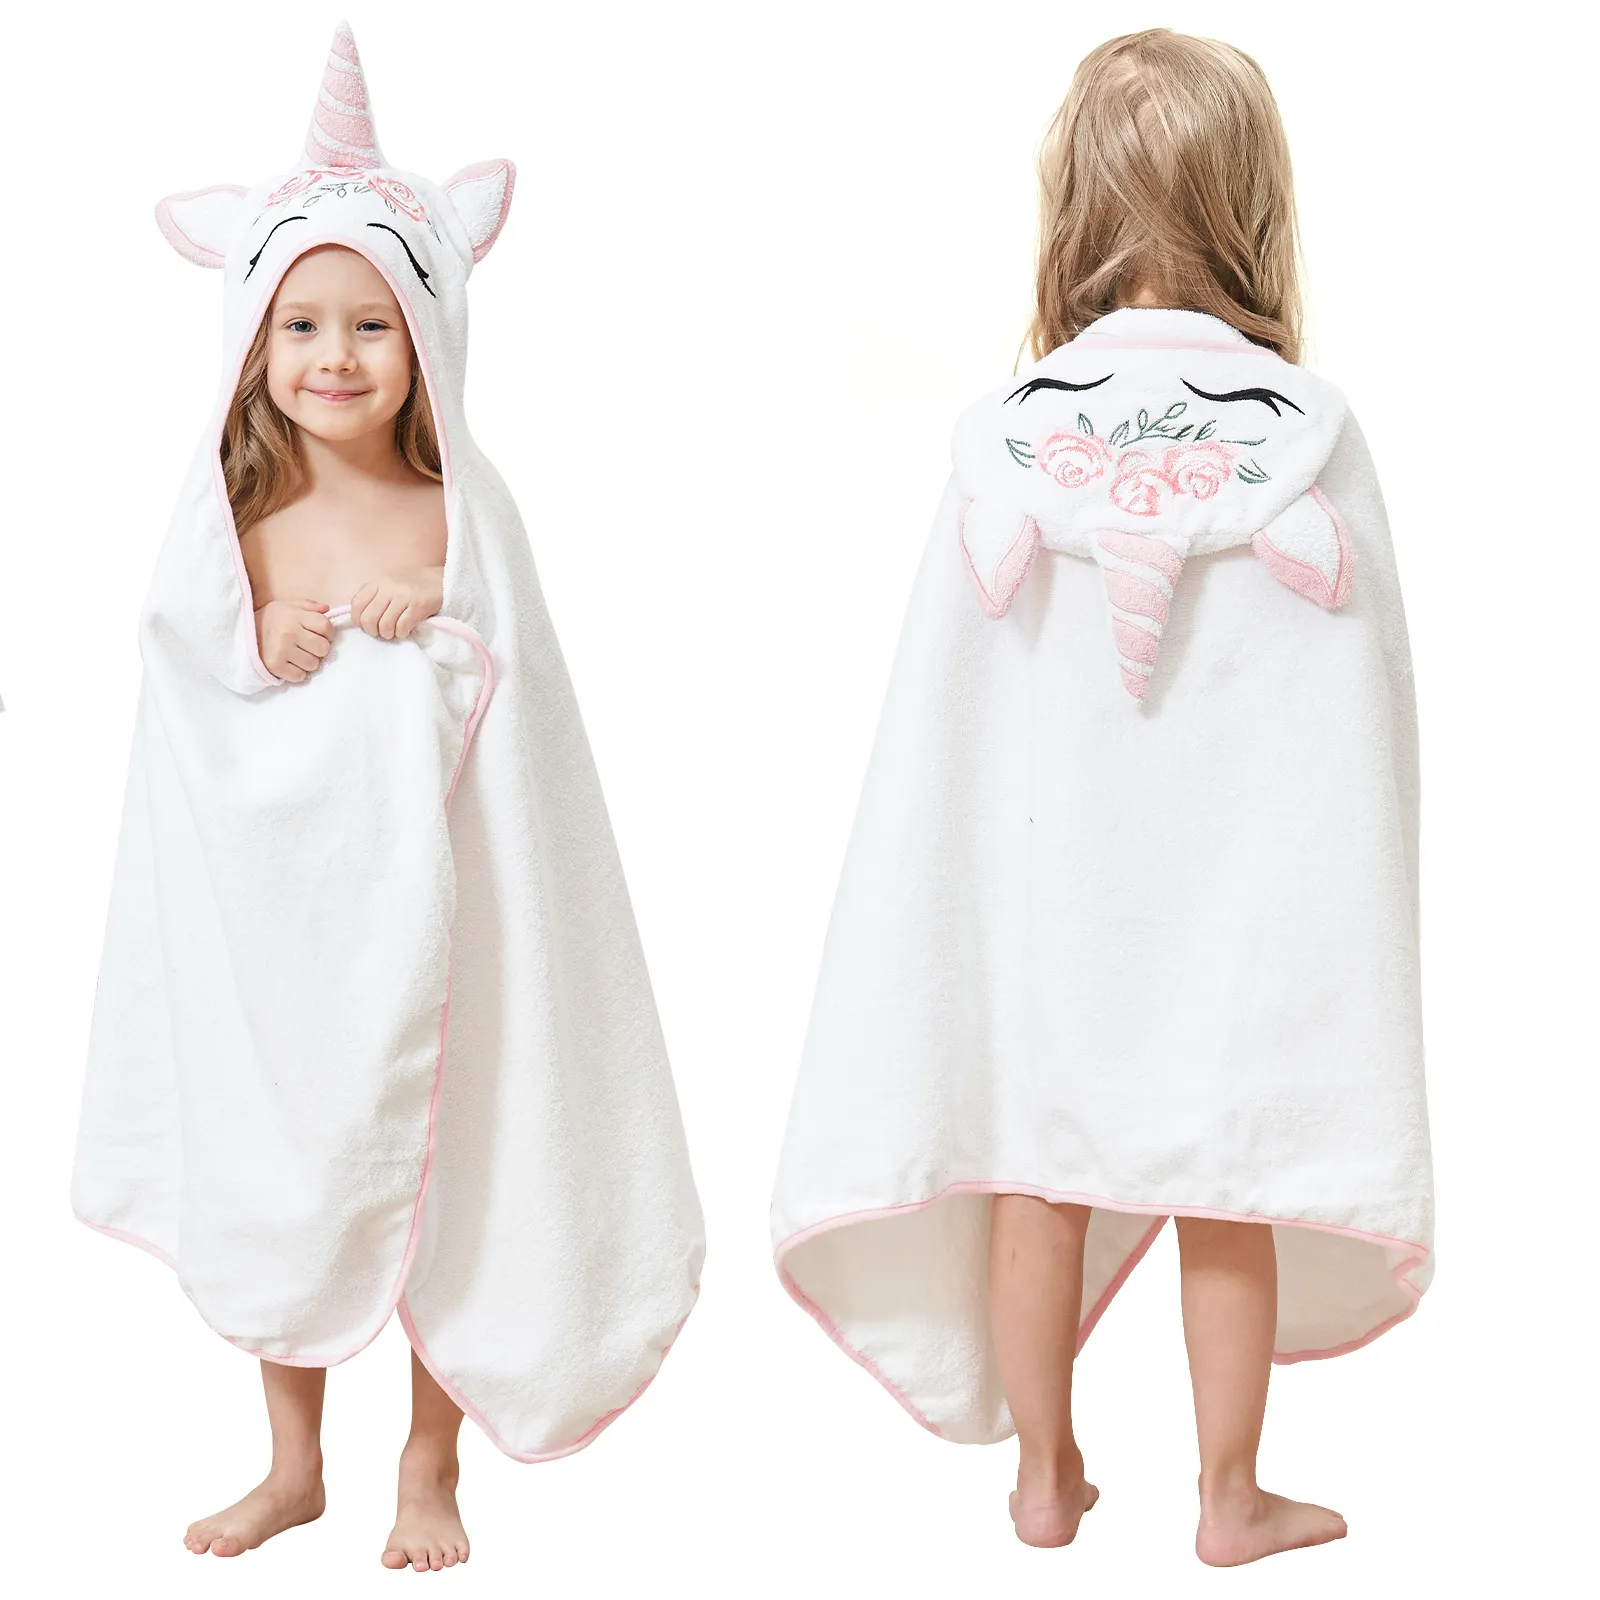 ALPHA TEXTILE Toallas Toalla de ducha para niños toallas con capucha para niños Toalla de playa personalizada algodón de alta calidad